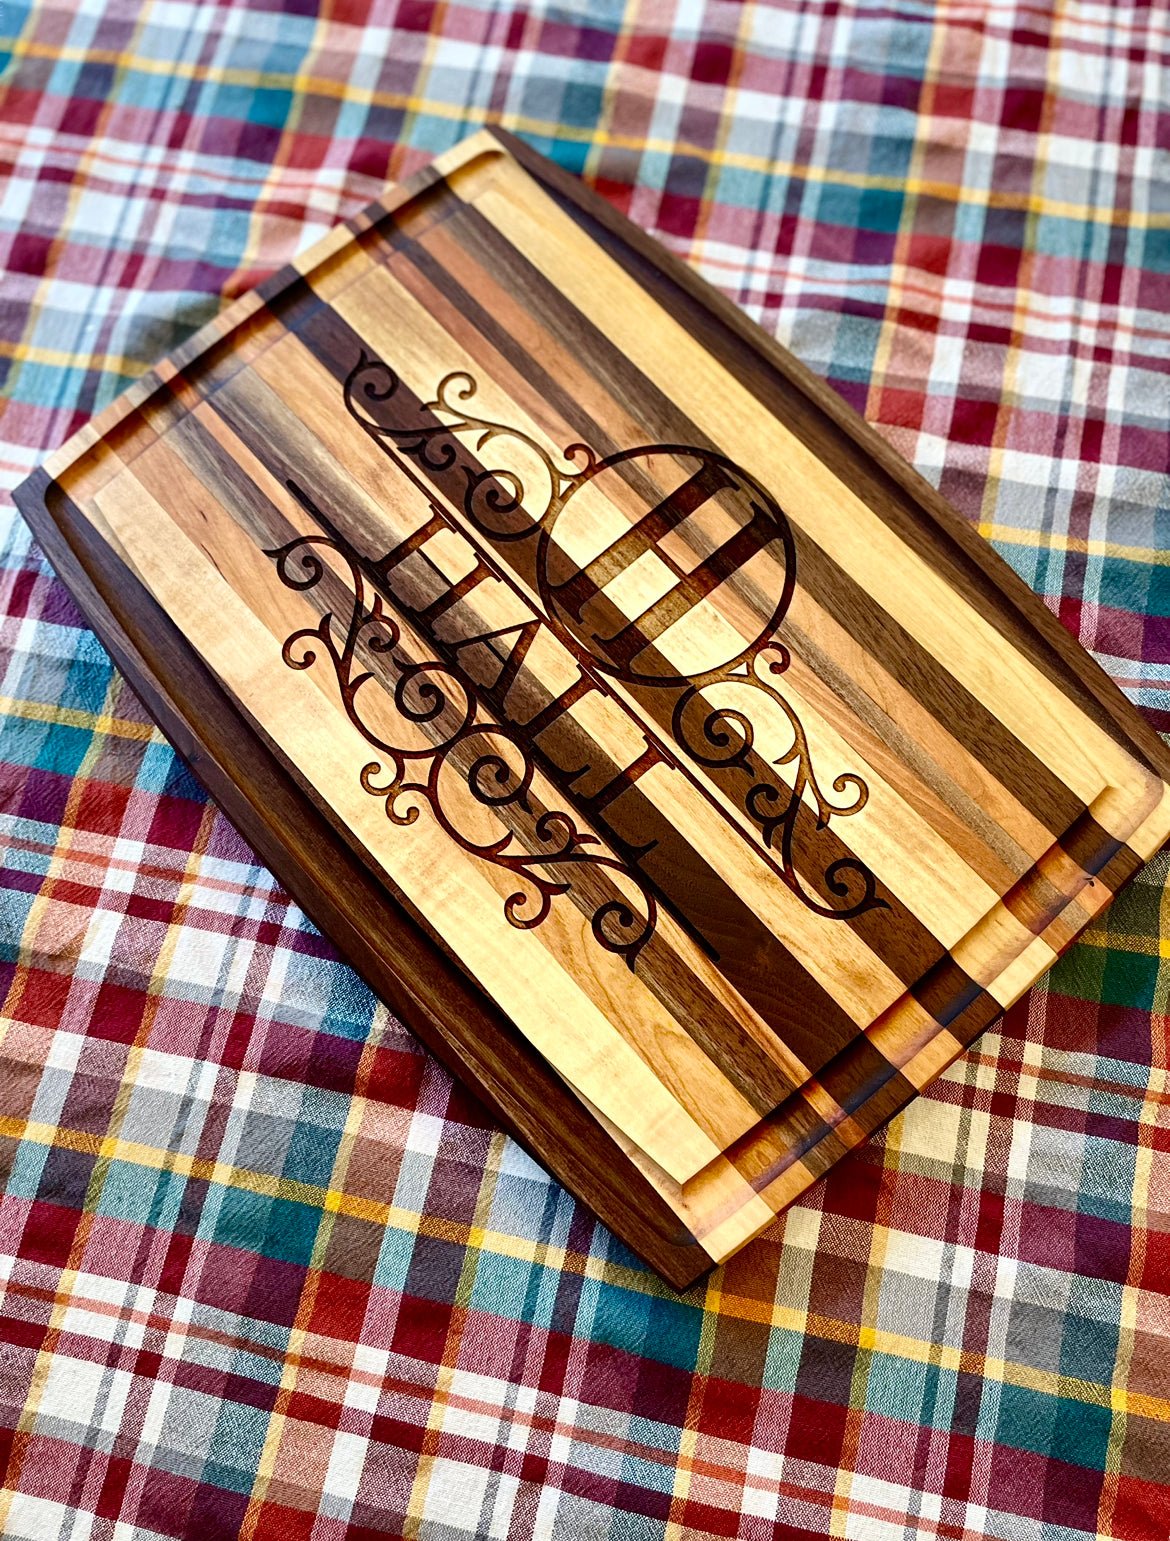 Personalized Wood Cutting Board